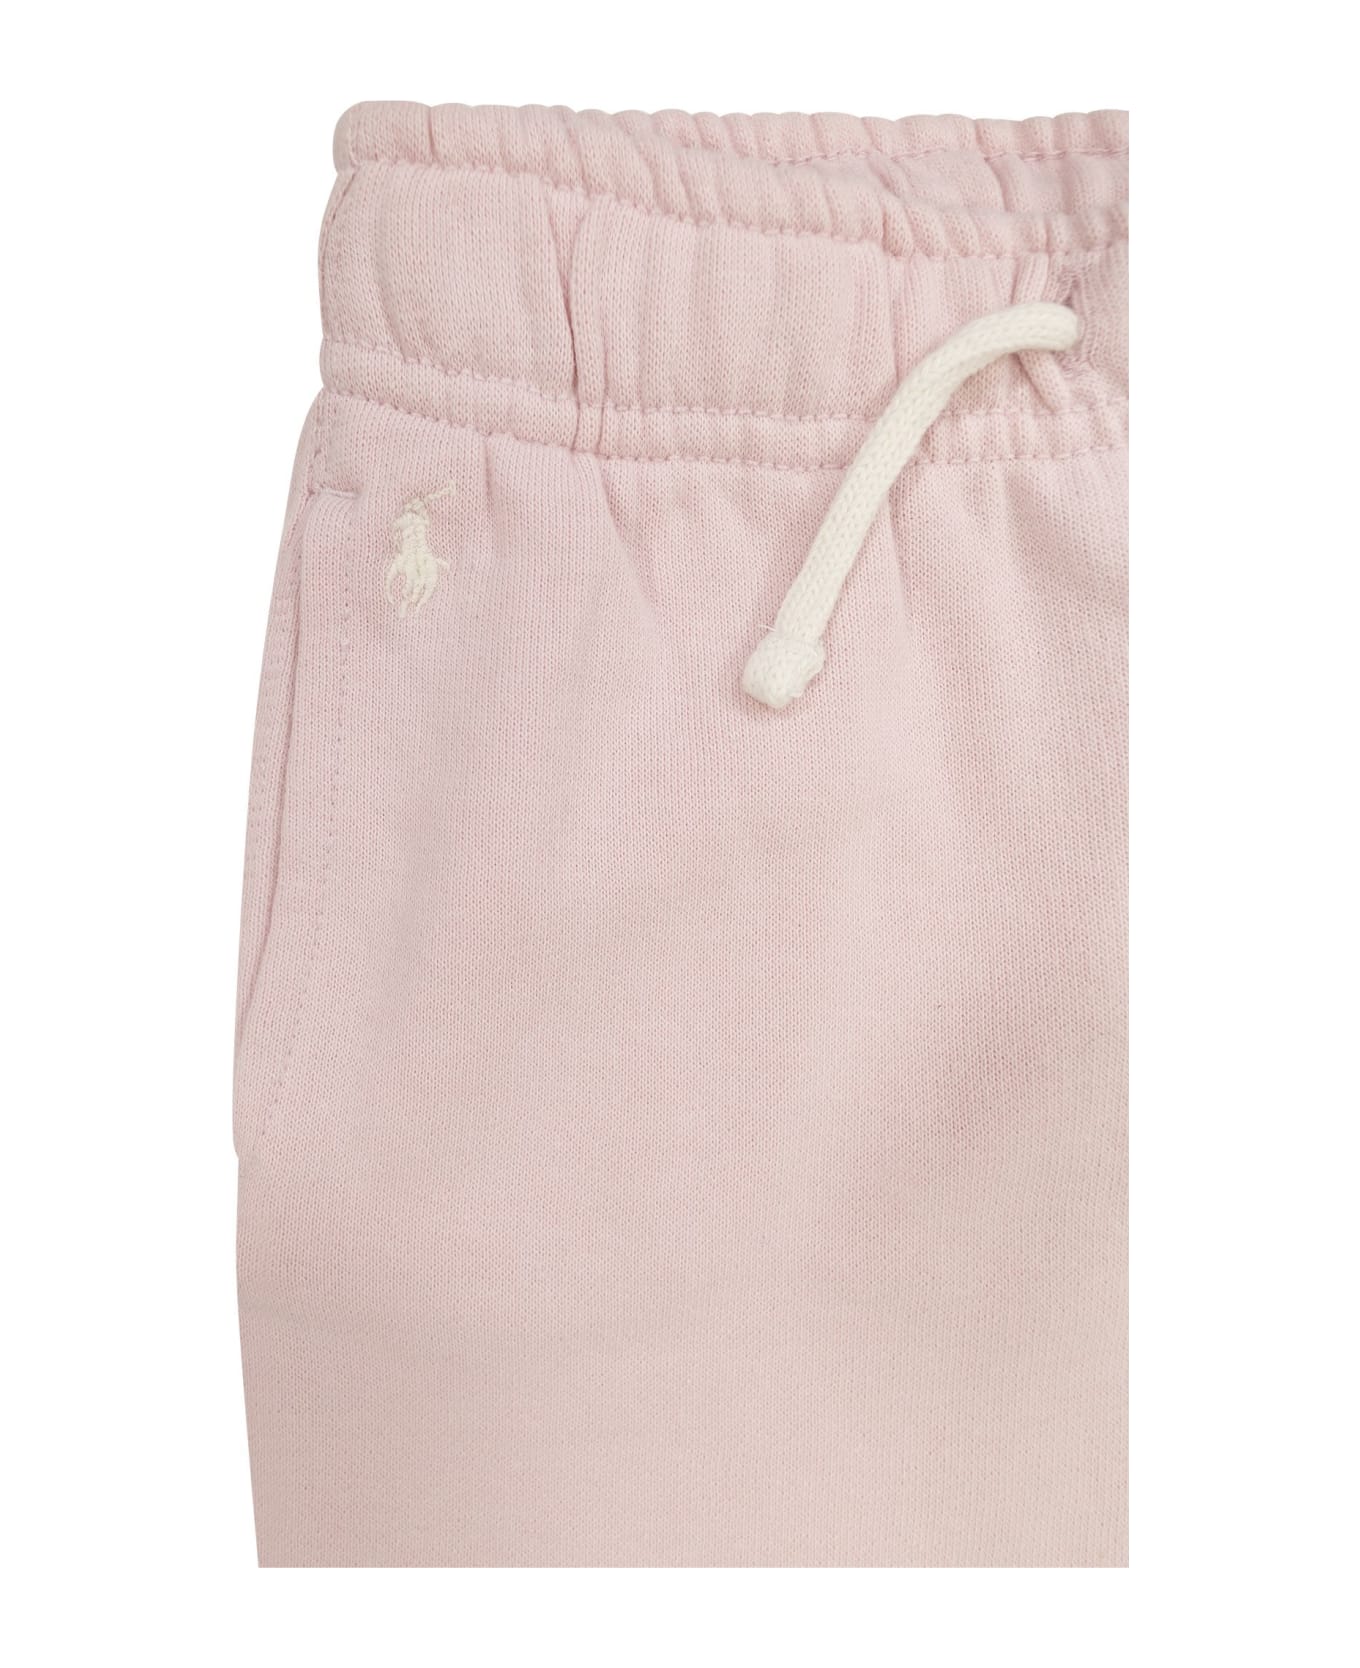 Polo Ralph Lauren Plush Jogging Trousers - Pink ボトムス